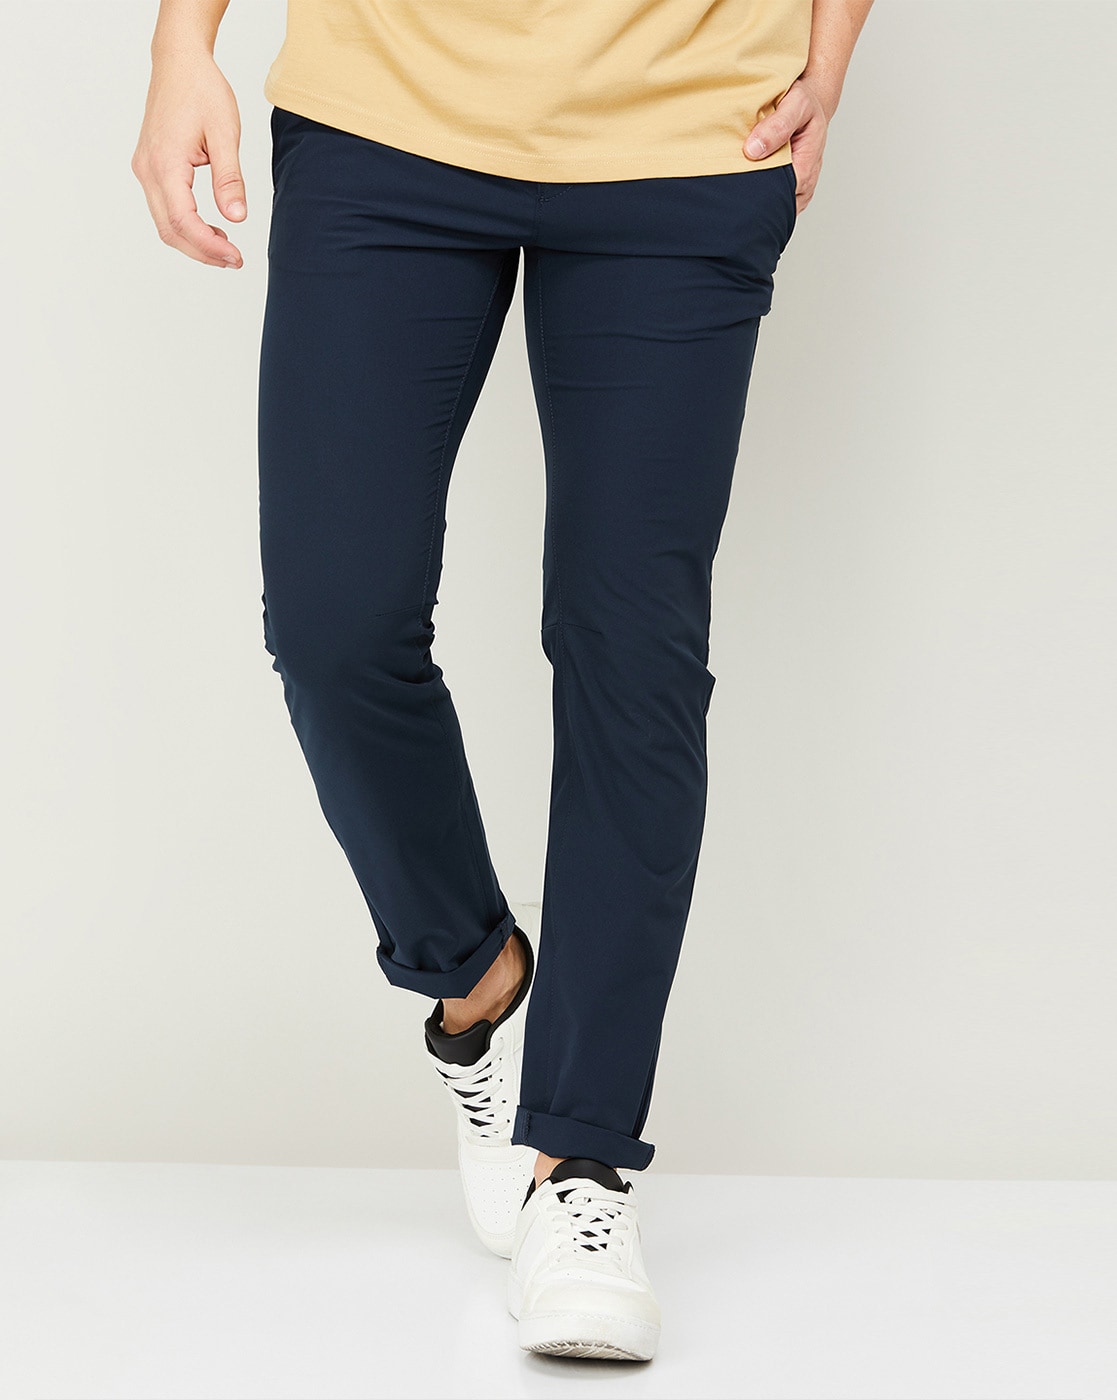 Men's Skinny Fit Pants | Nordstrom